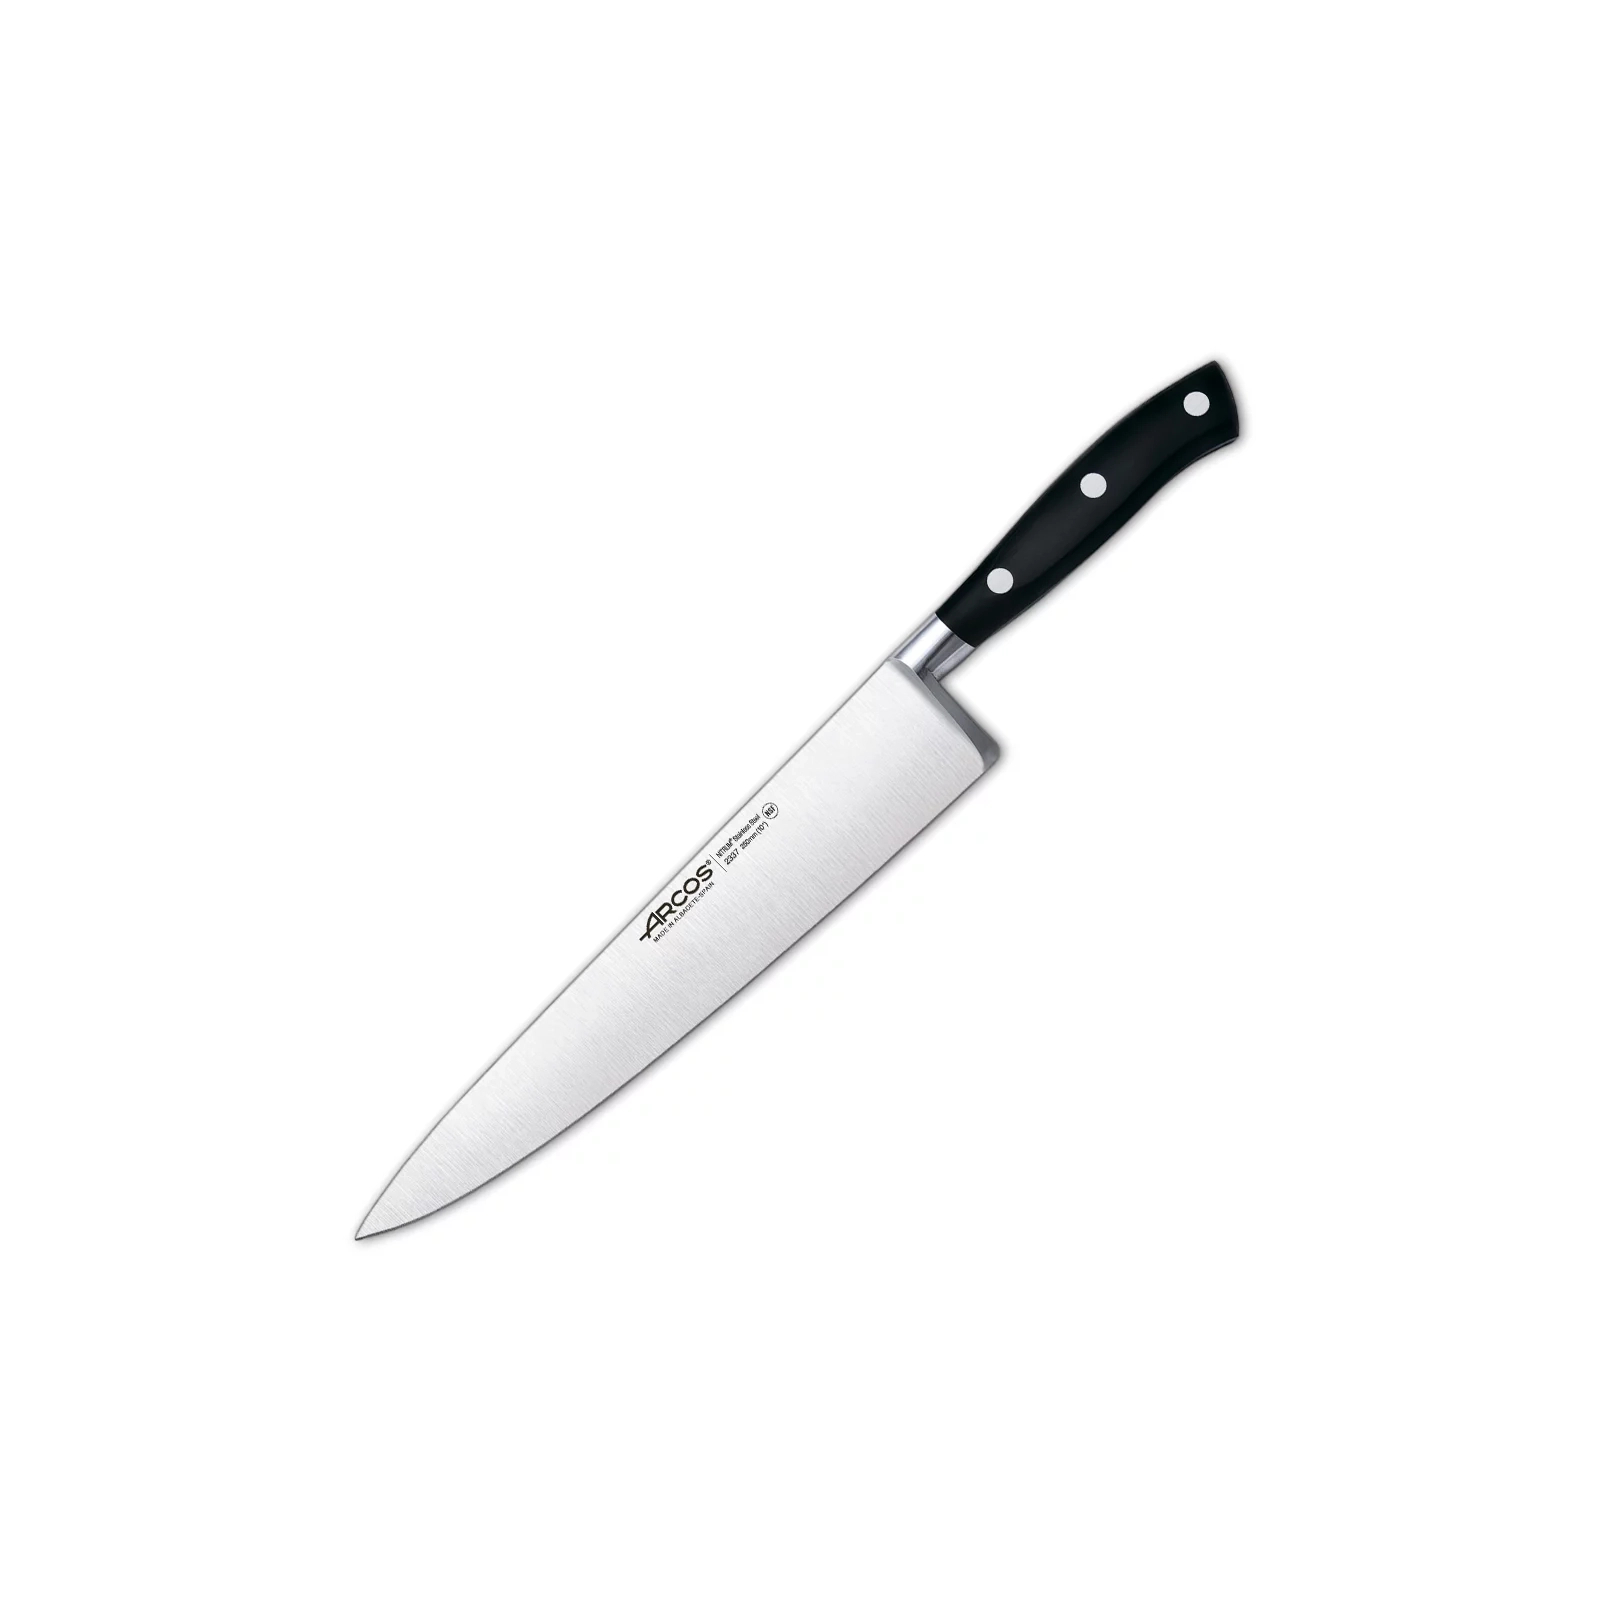 Кухонный нож Arcos Riviera поварський 250 мм (233700)